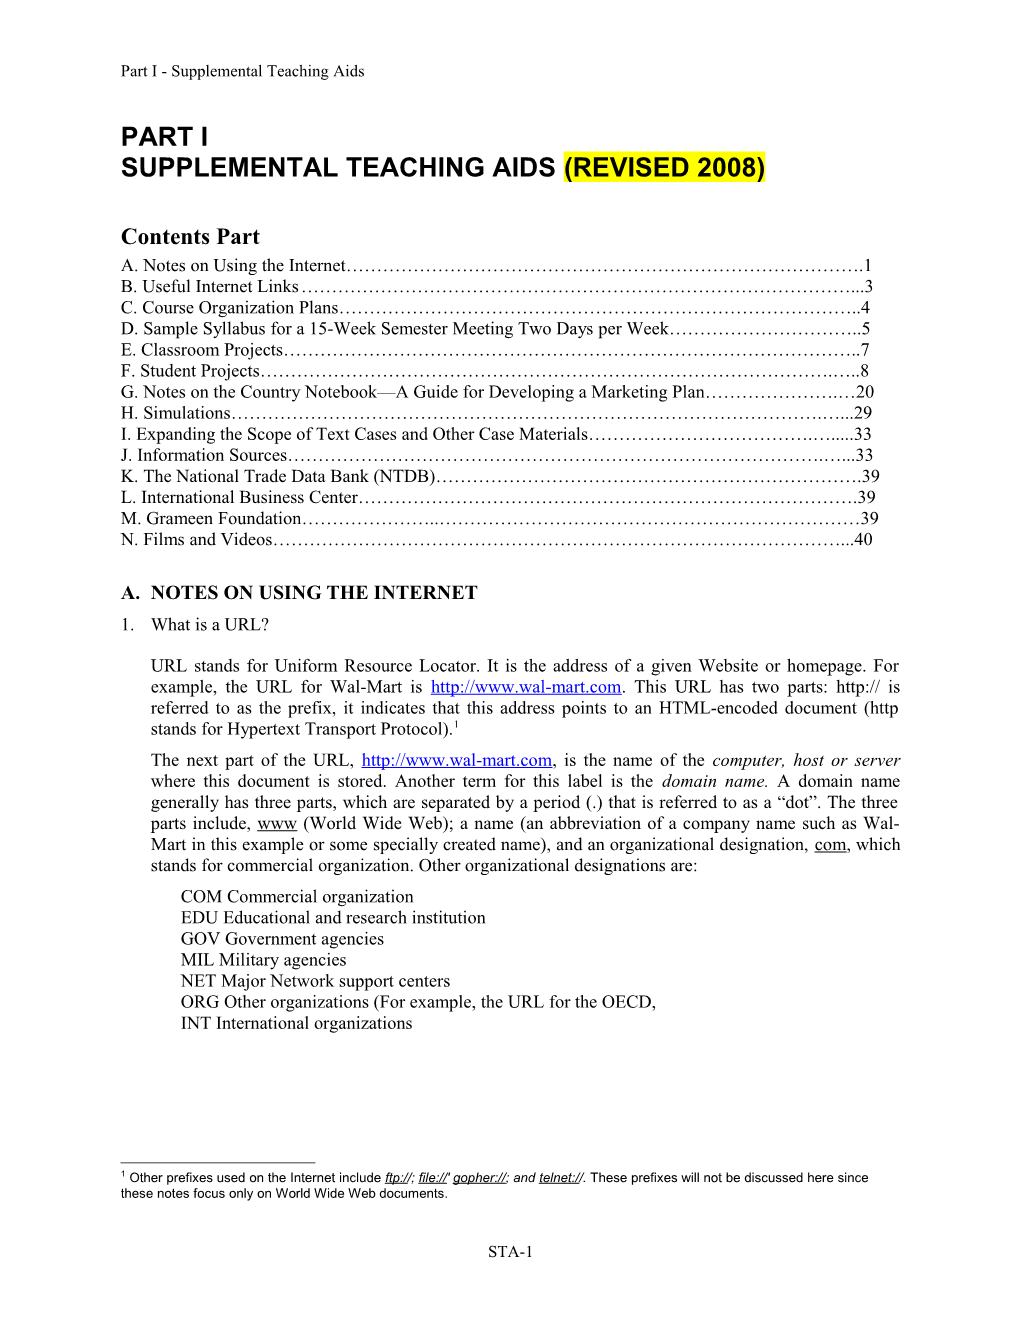 SUPPLEMENTAL Teaching AIDS(REVISED 2008)